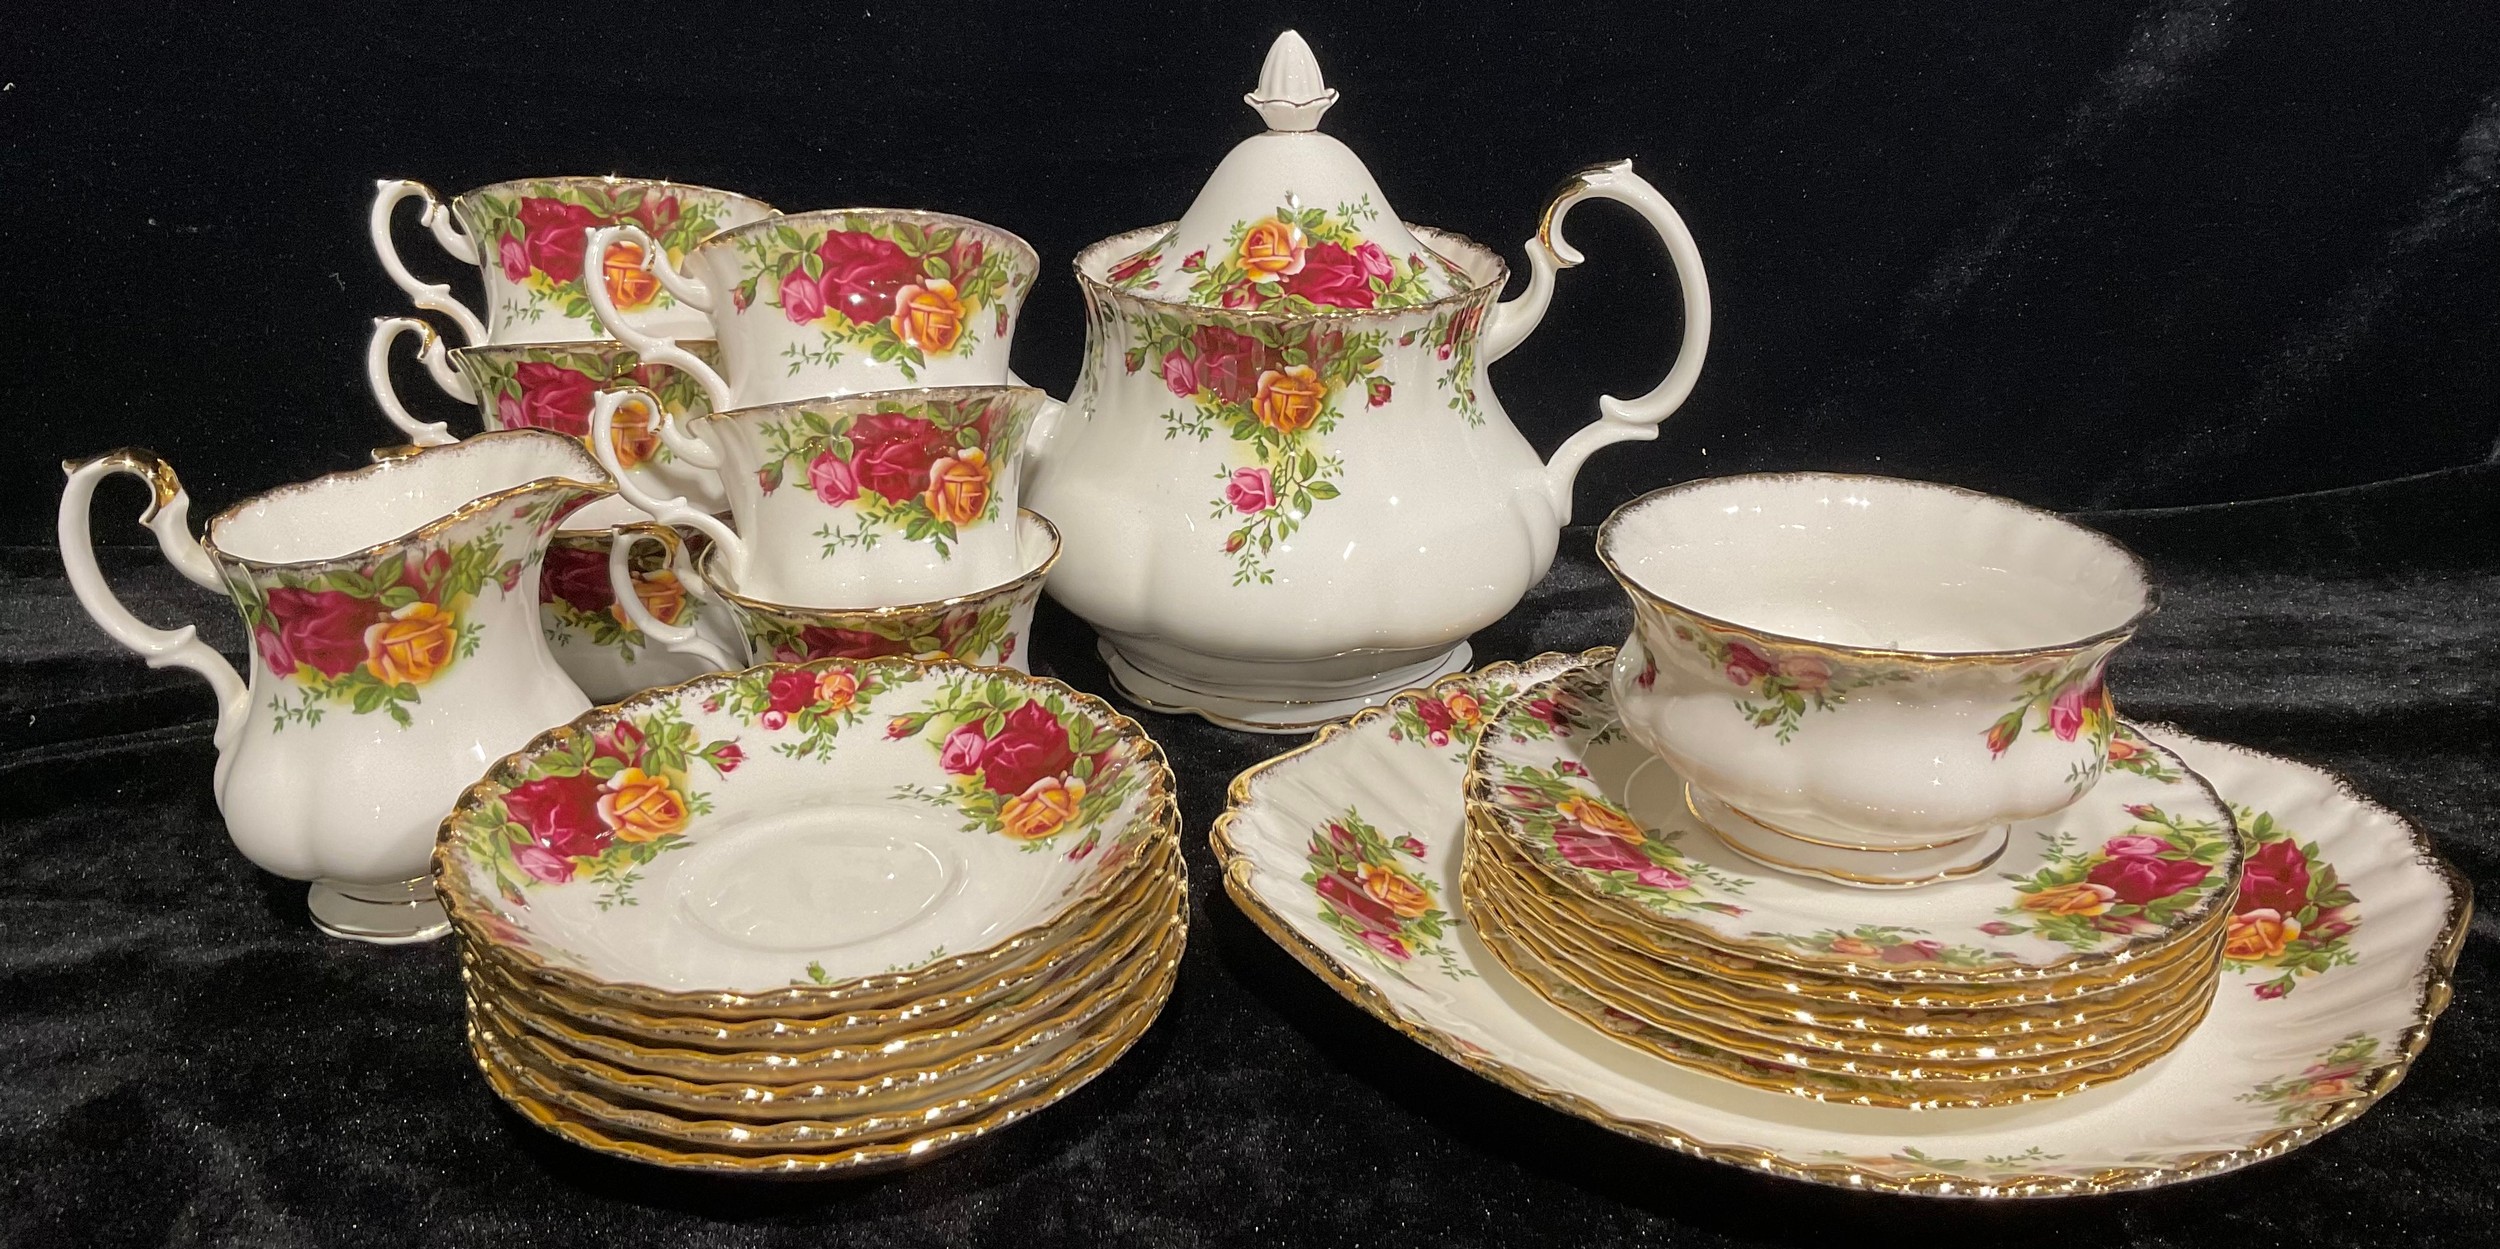 A Royal Albert Old Country Roses pattern tea service, for six, comprising teapot, cream jug, sugar